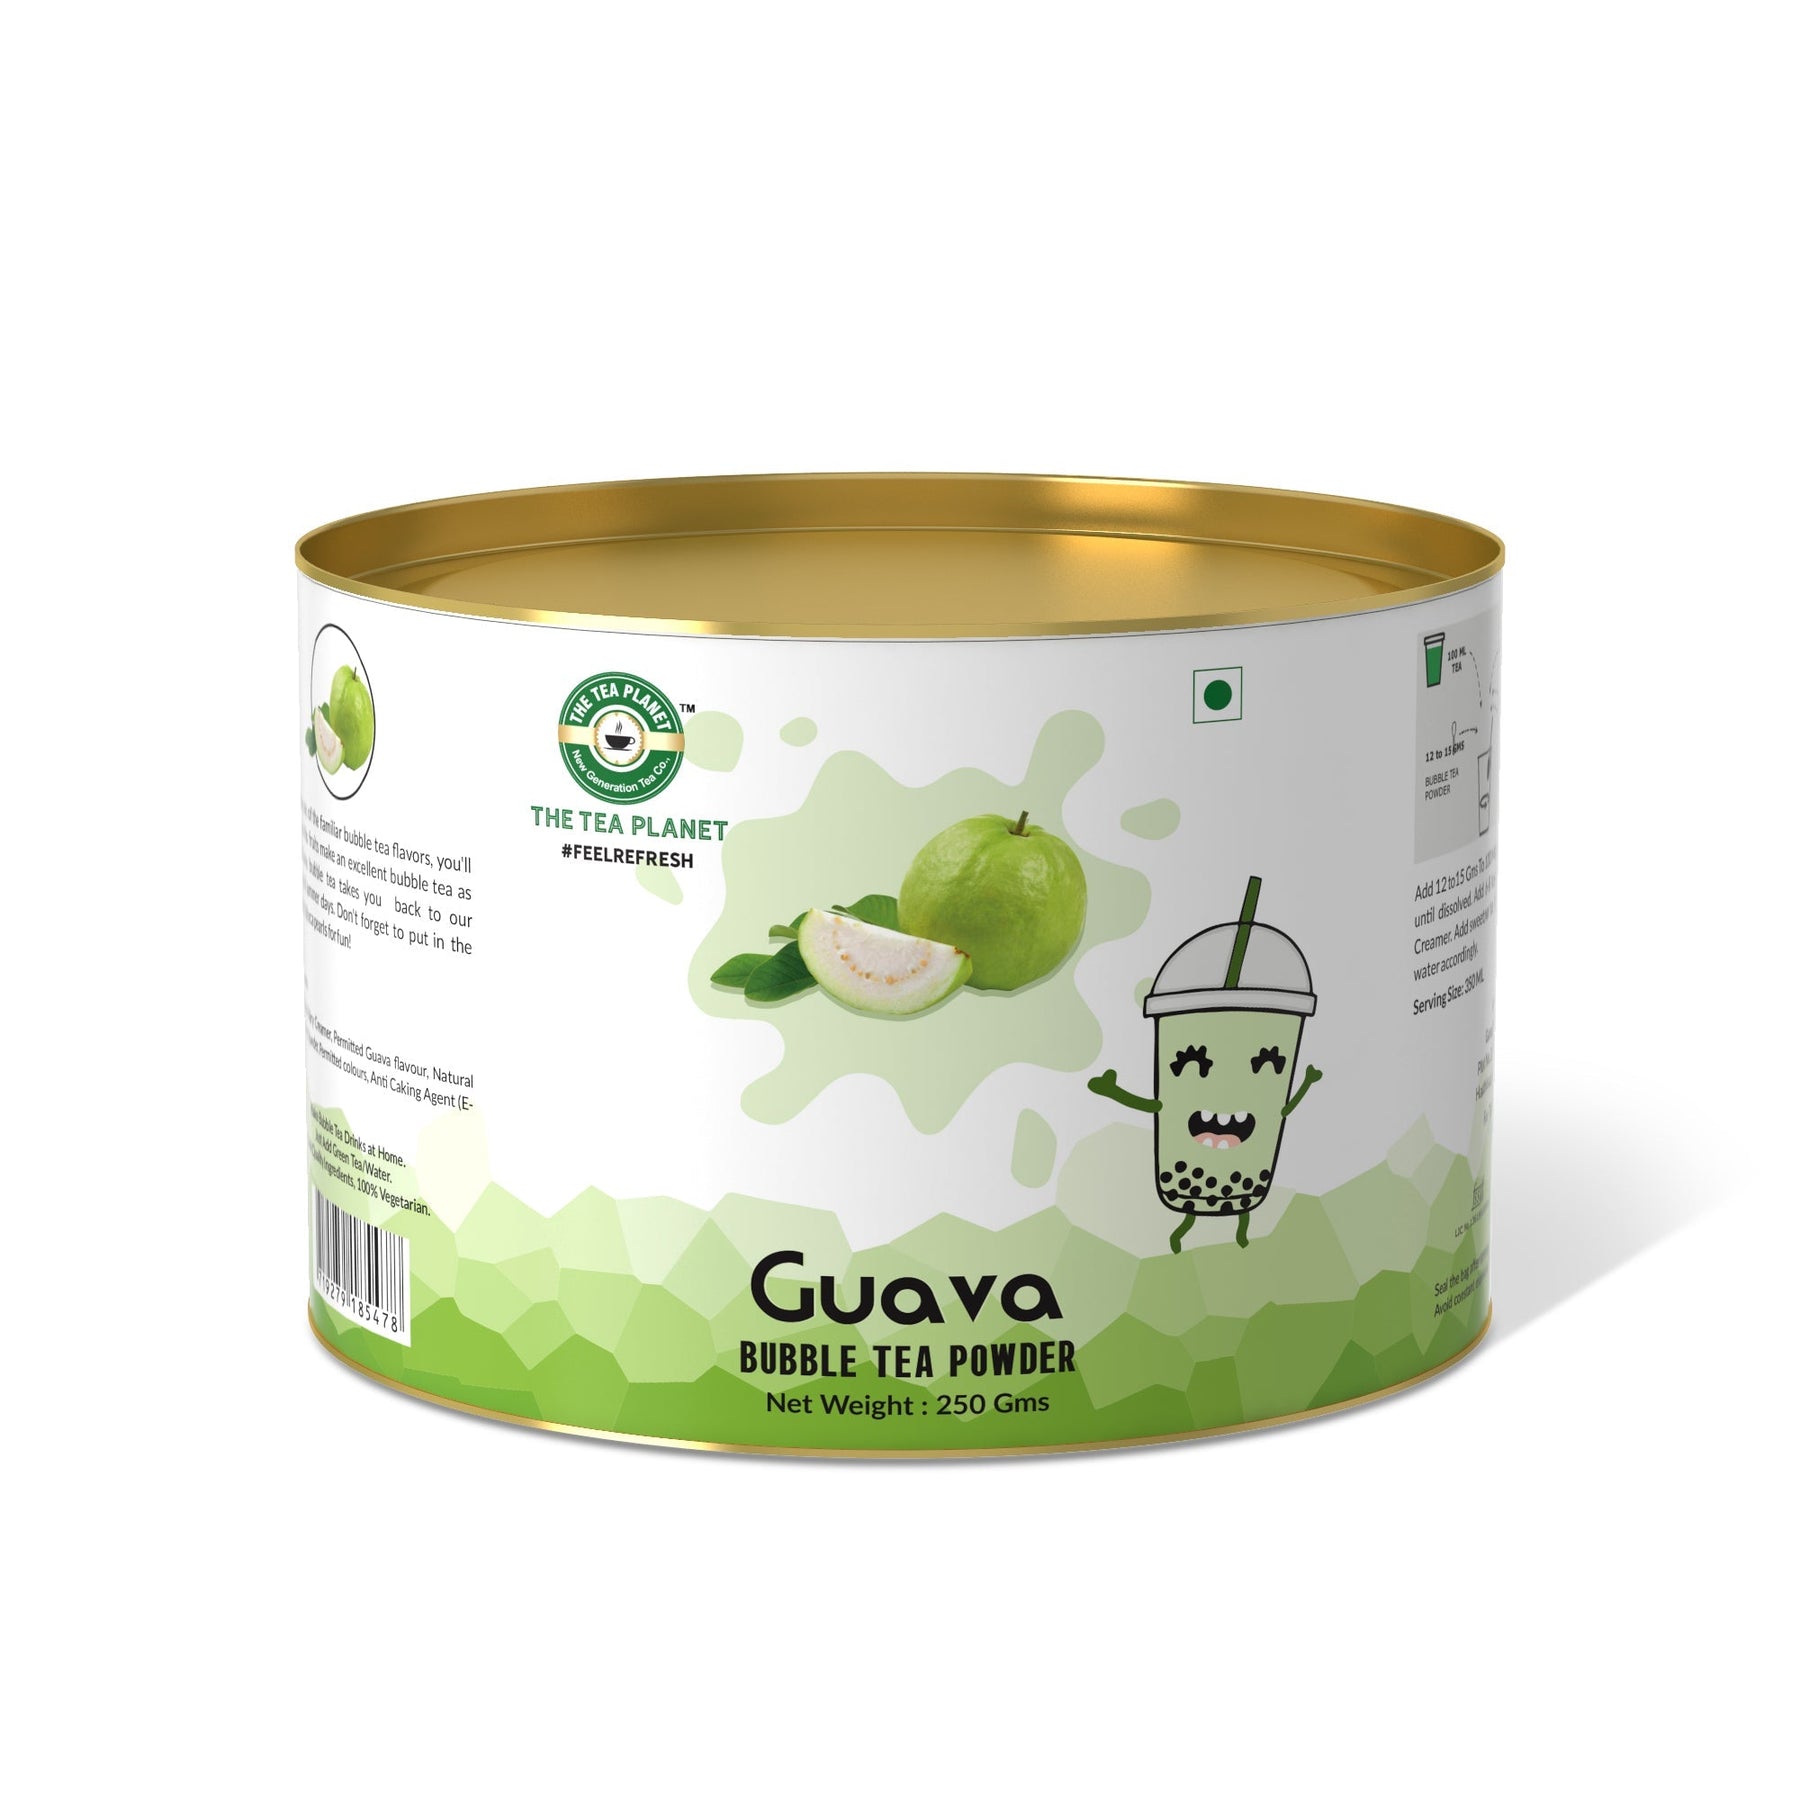 Guava Bubble Tea Premix - 400 gms